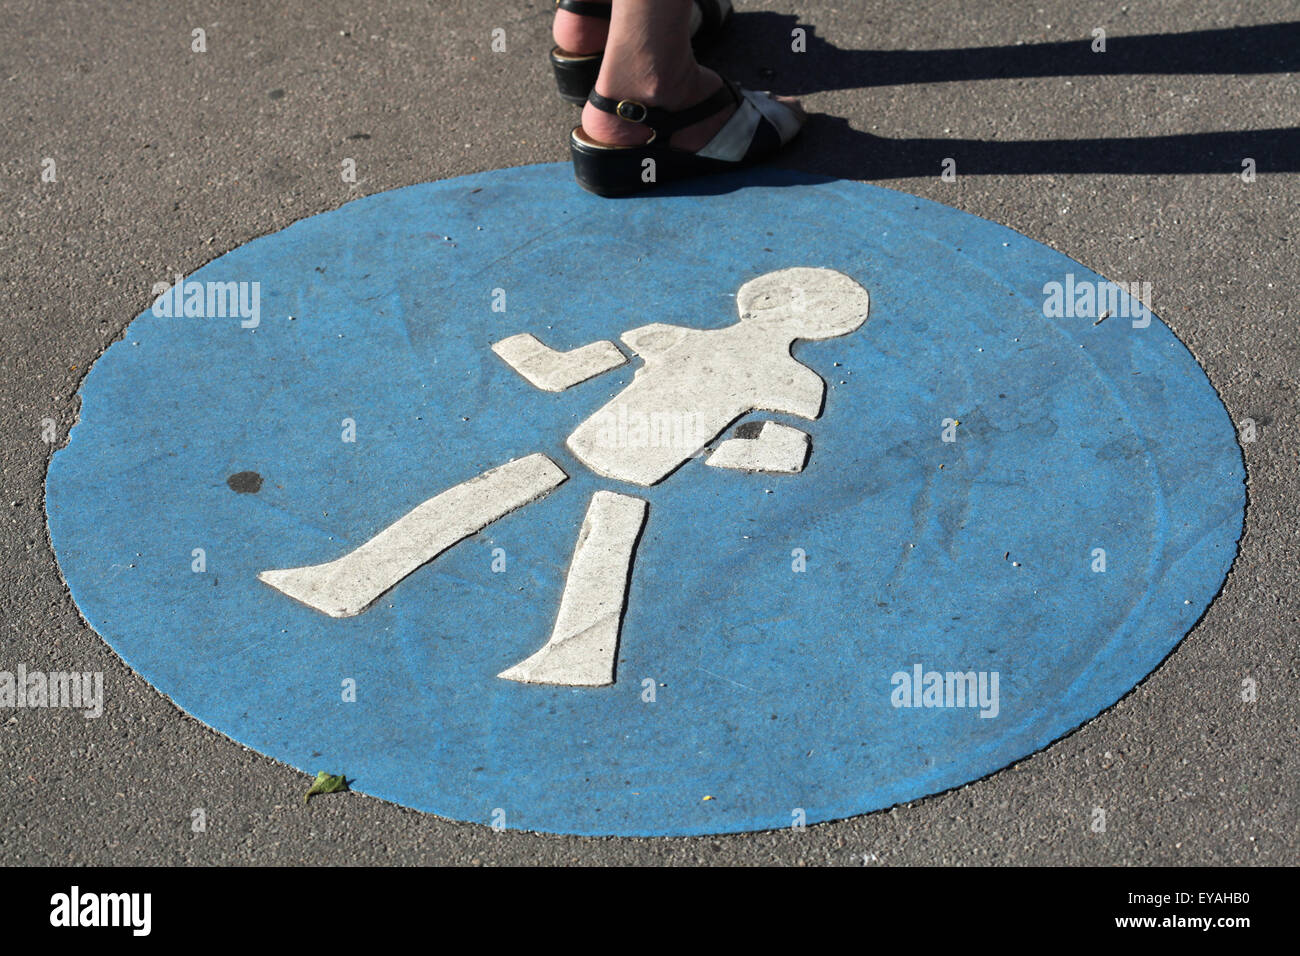 Woman stands next to a blue pedestrian walkway sign in Vienna, Austria. Stock Photo